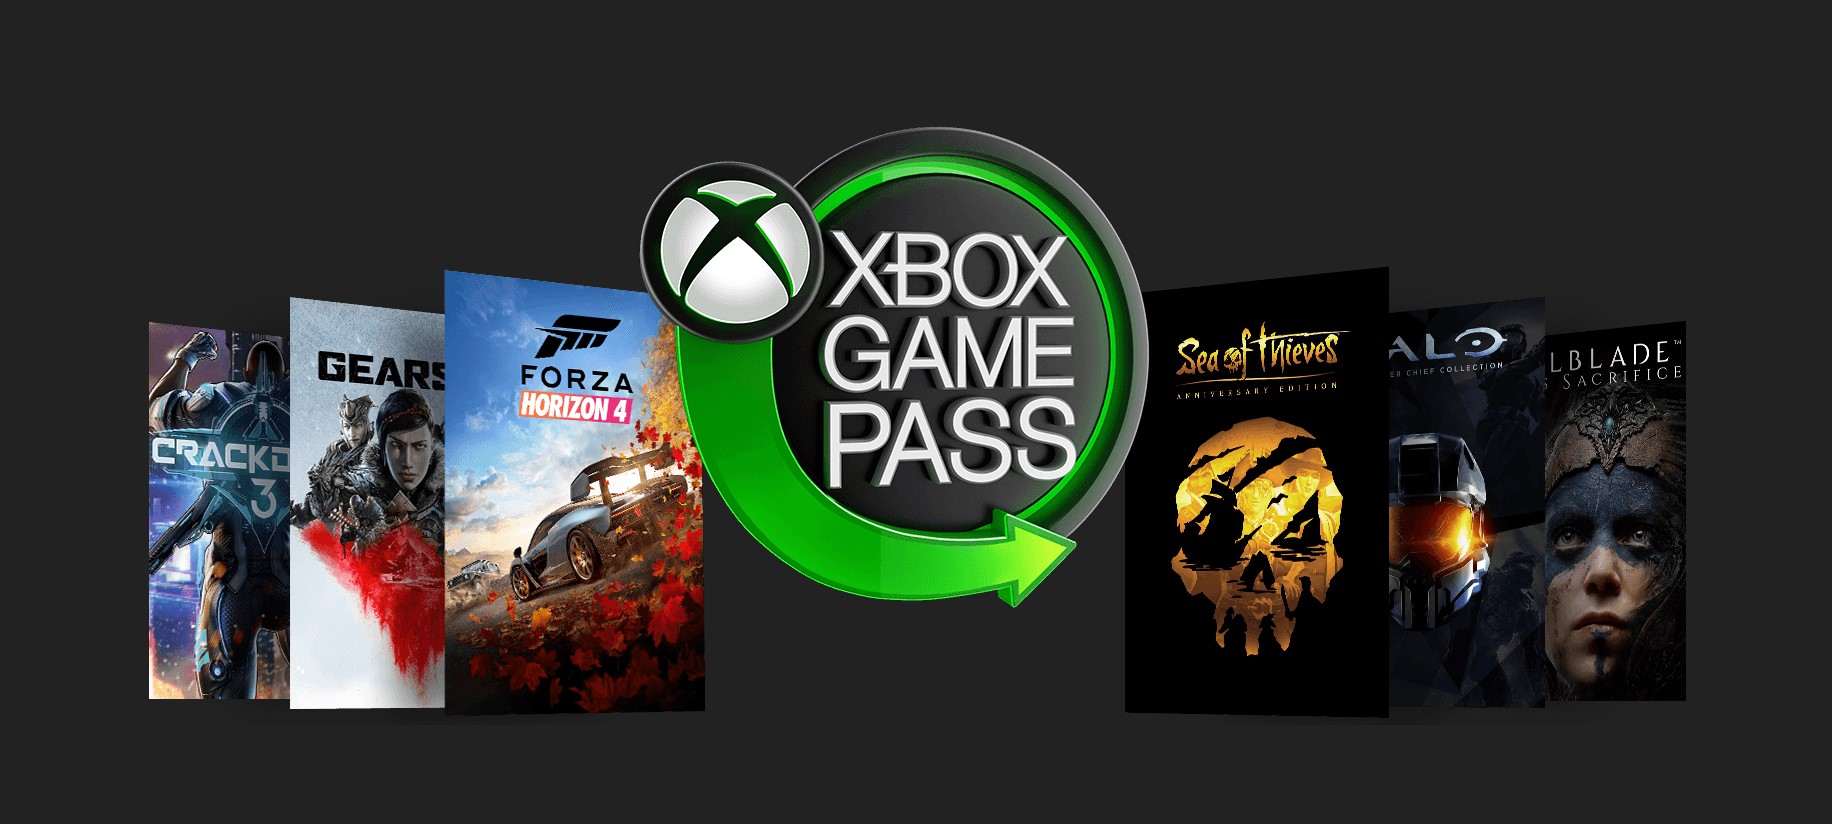 Game Pass. Xbox game Pass Unlimited. Xbox game Studio.